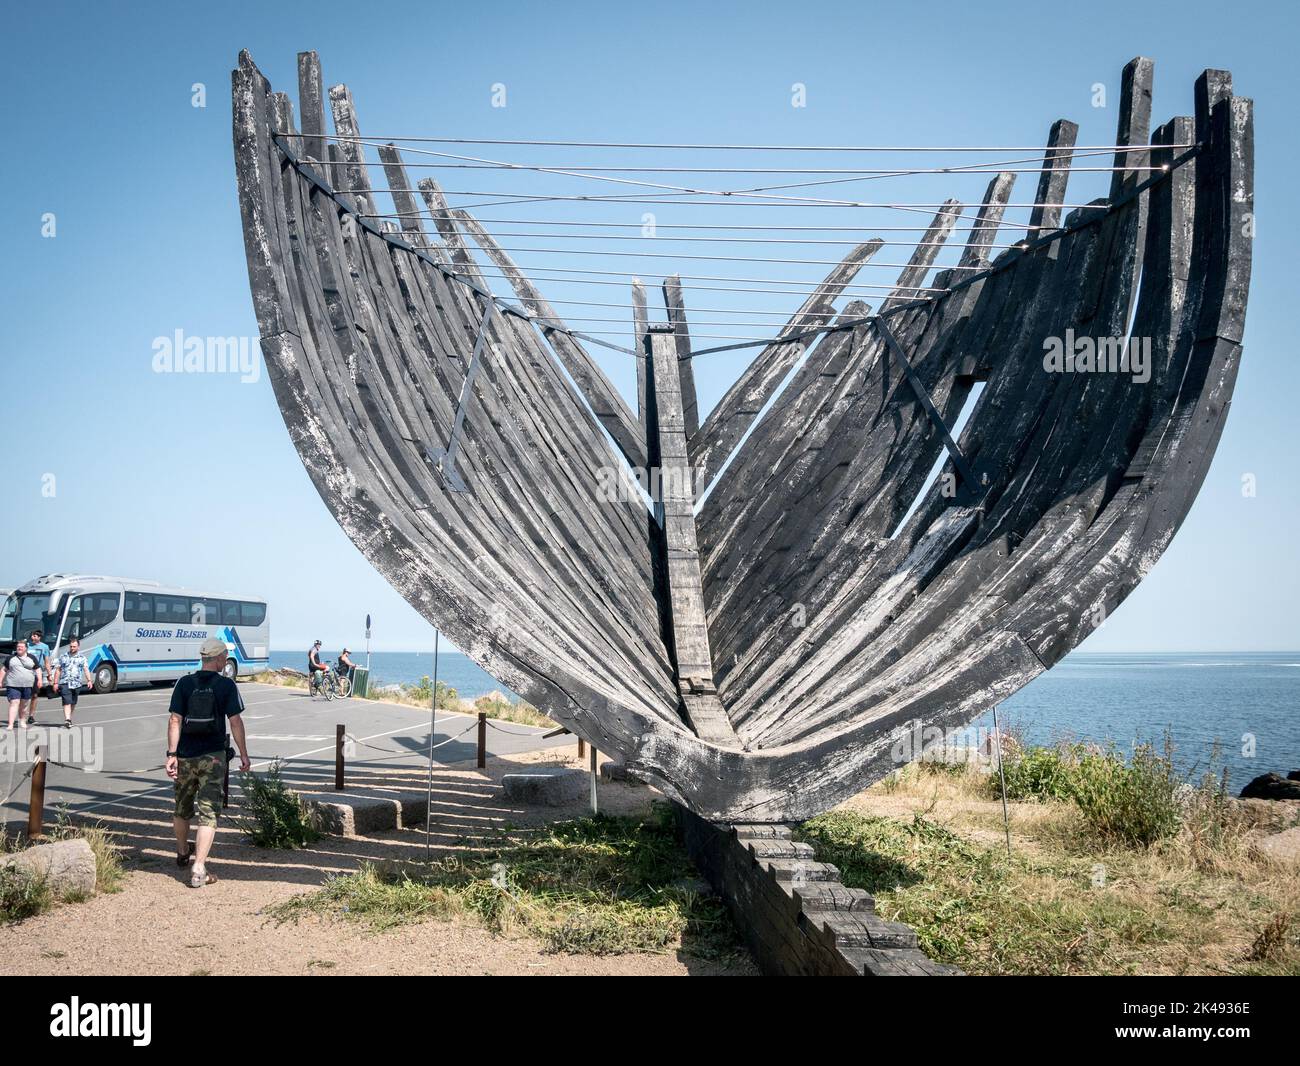 The remains of the barque ”Svanen”. Svaneke, Bornholm, Baltic Sea. Stock Photo